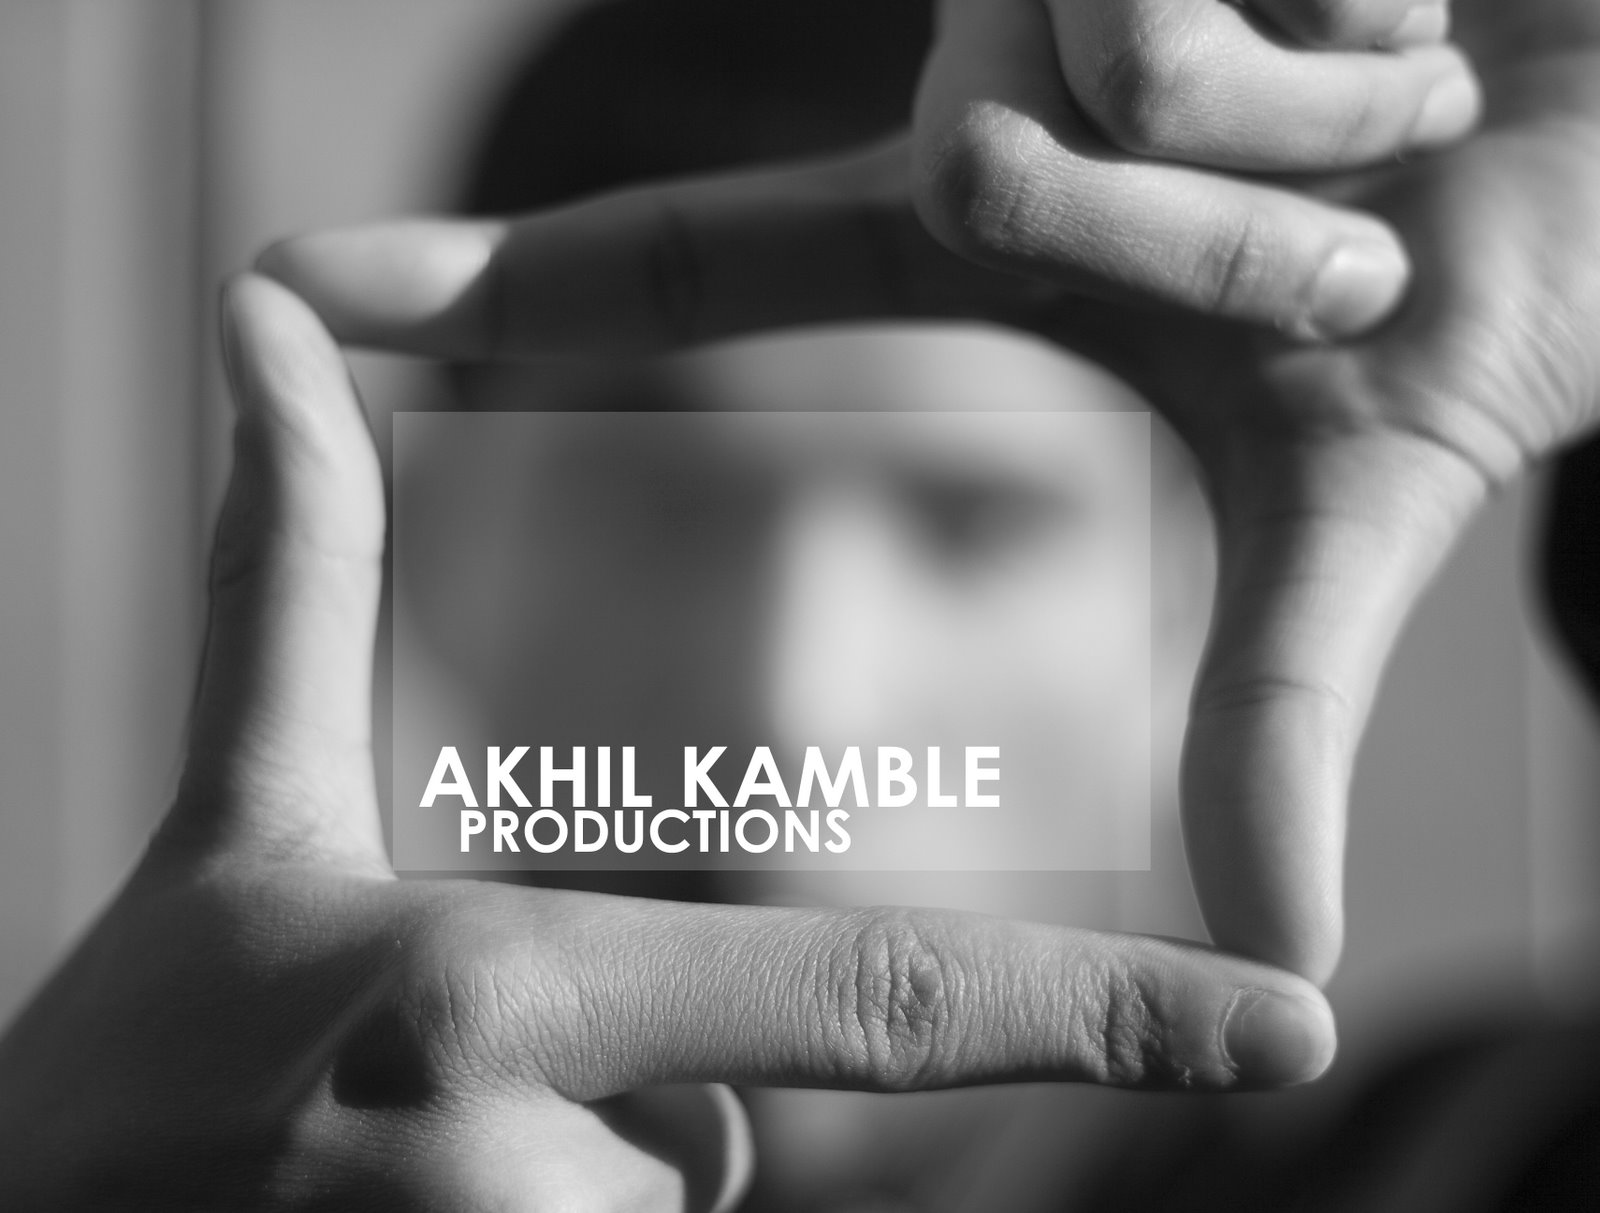 Akhil Kamble Productions